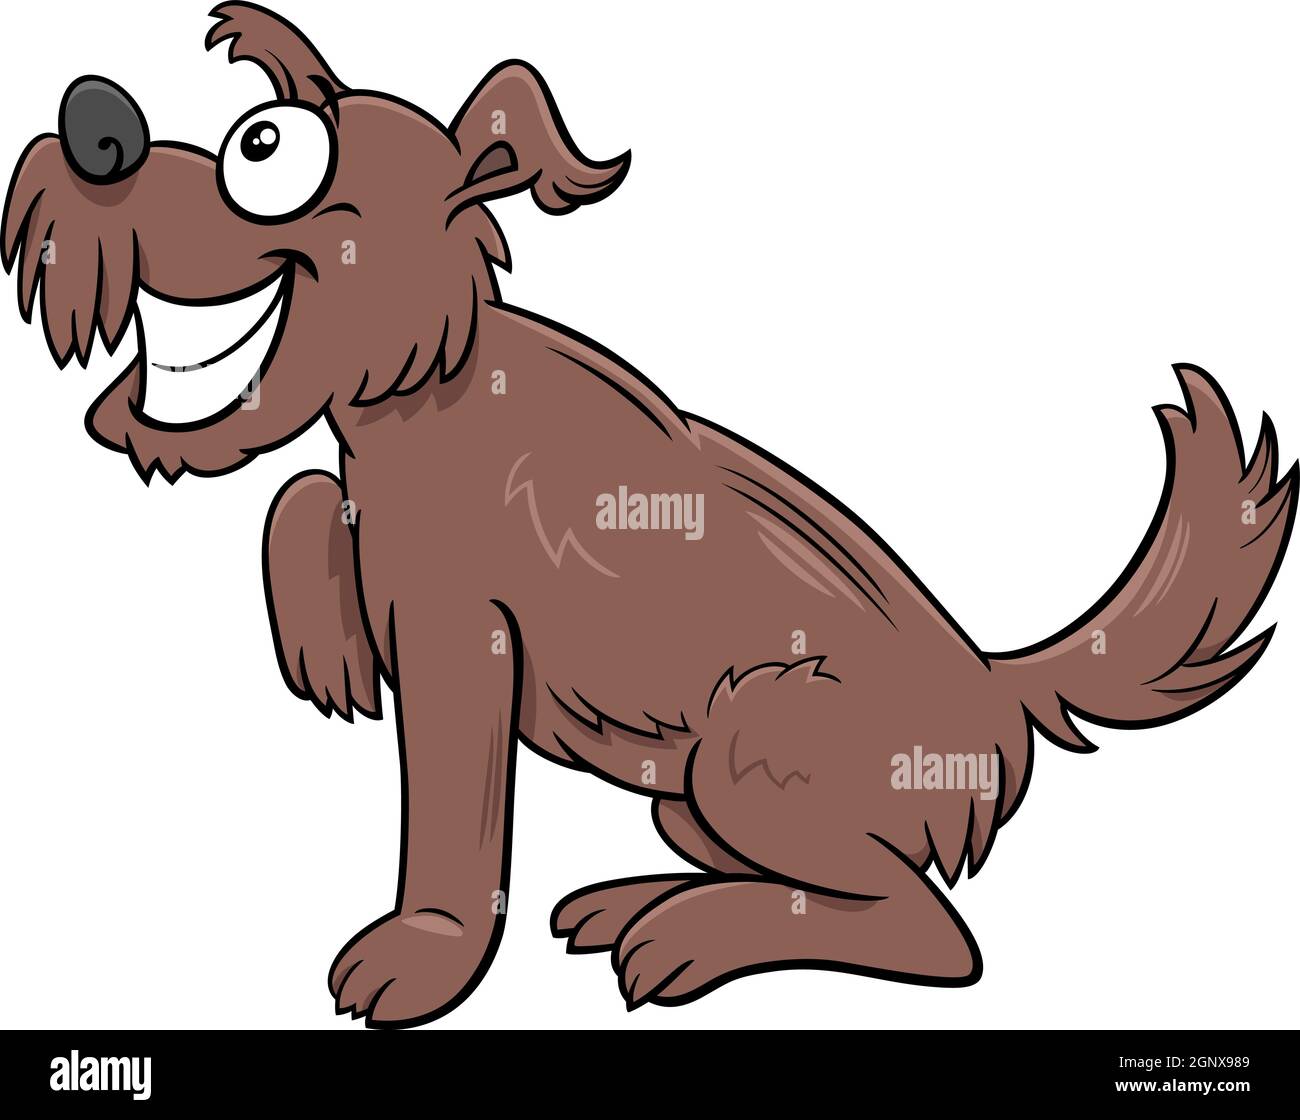 cartoon brown shaggy dog comic animal character Stock Vector Image